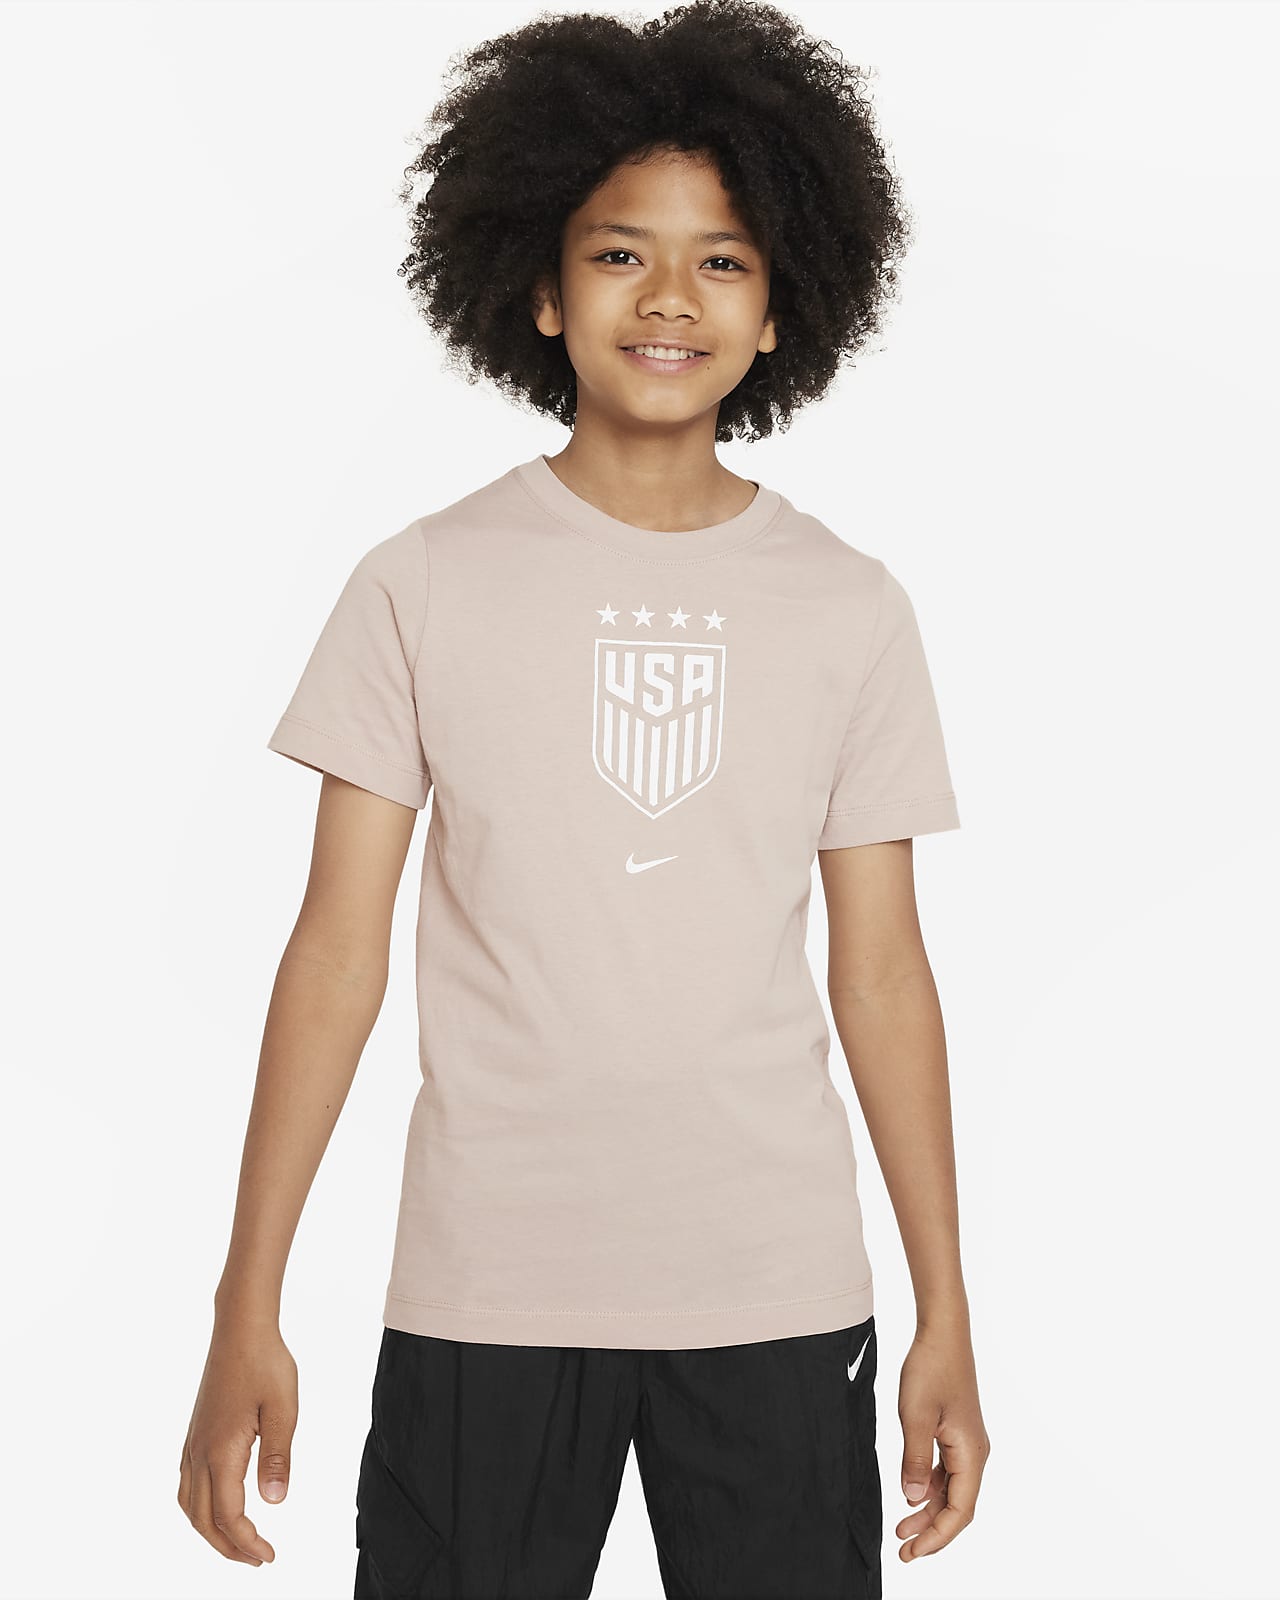 USWNT Big Kids' Nike Soccer T-Shirt